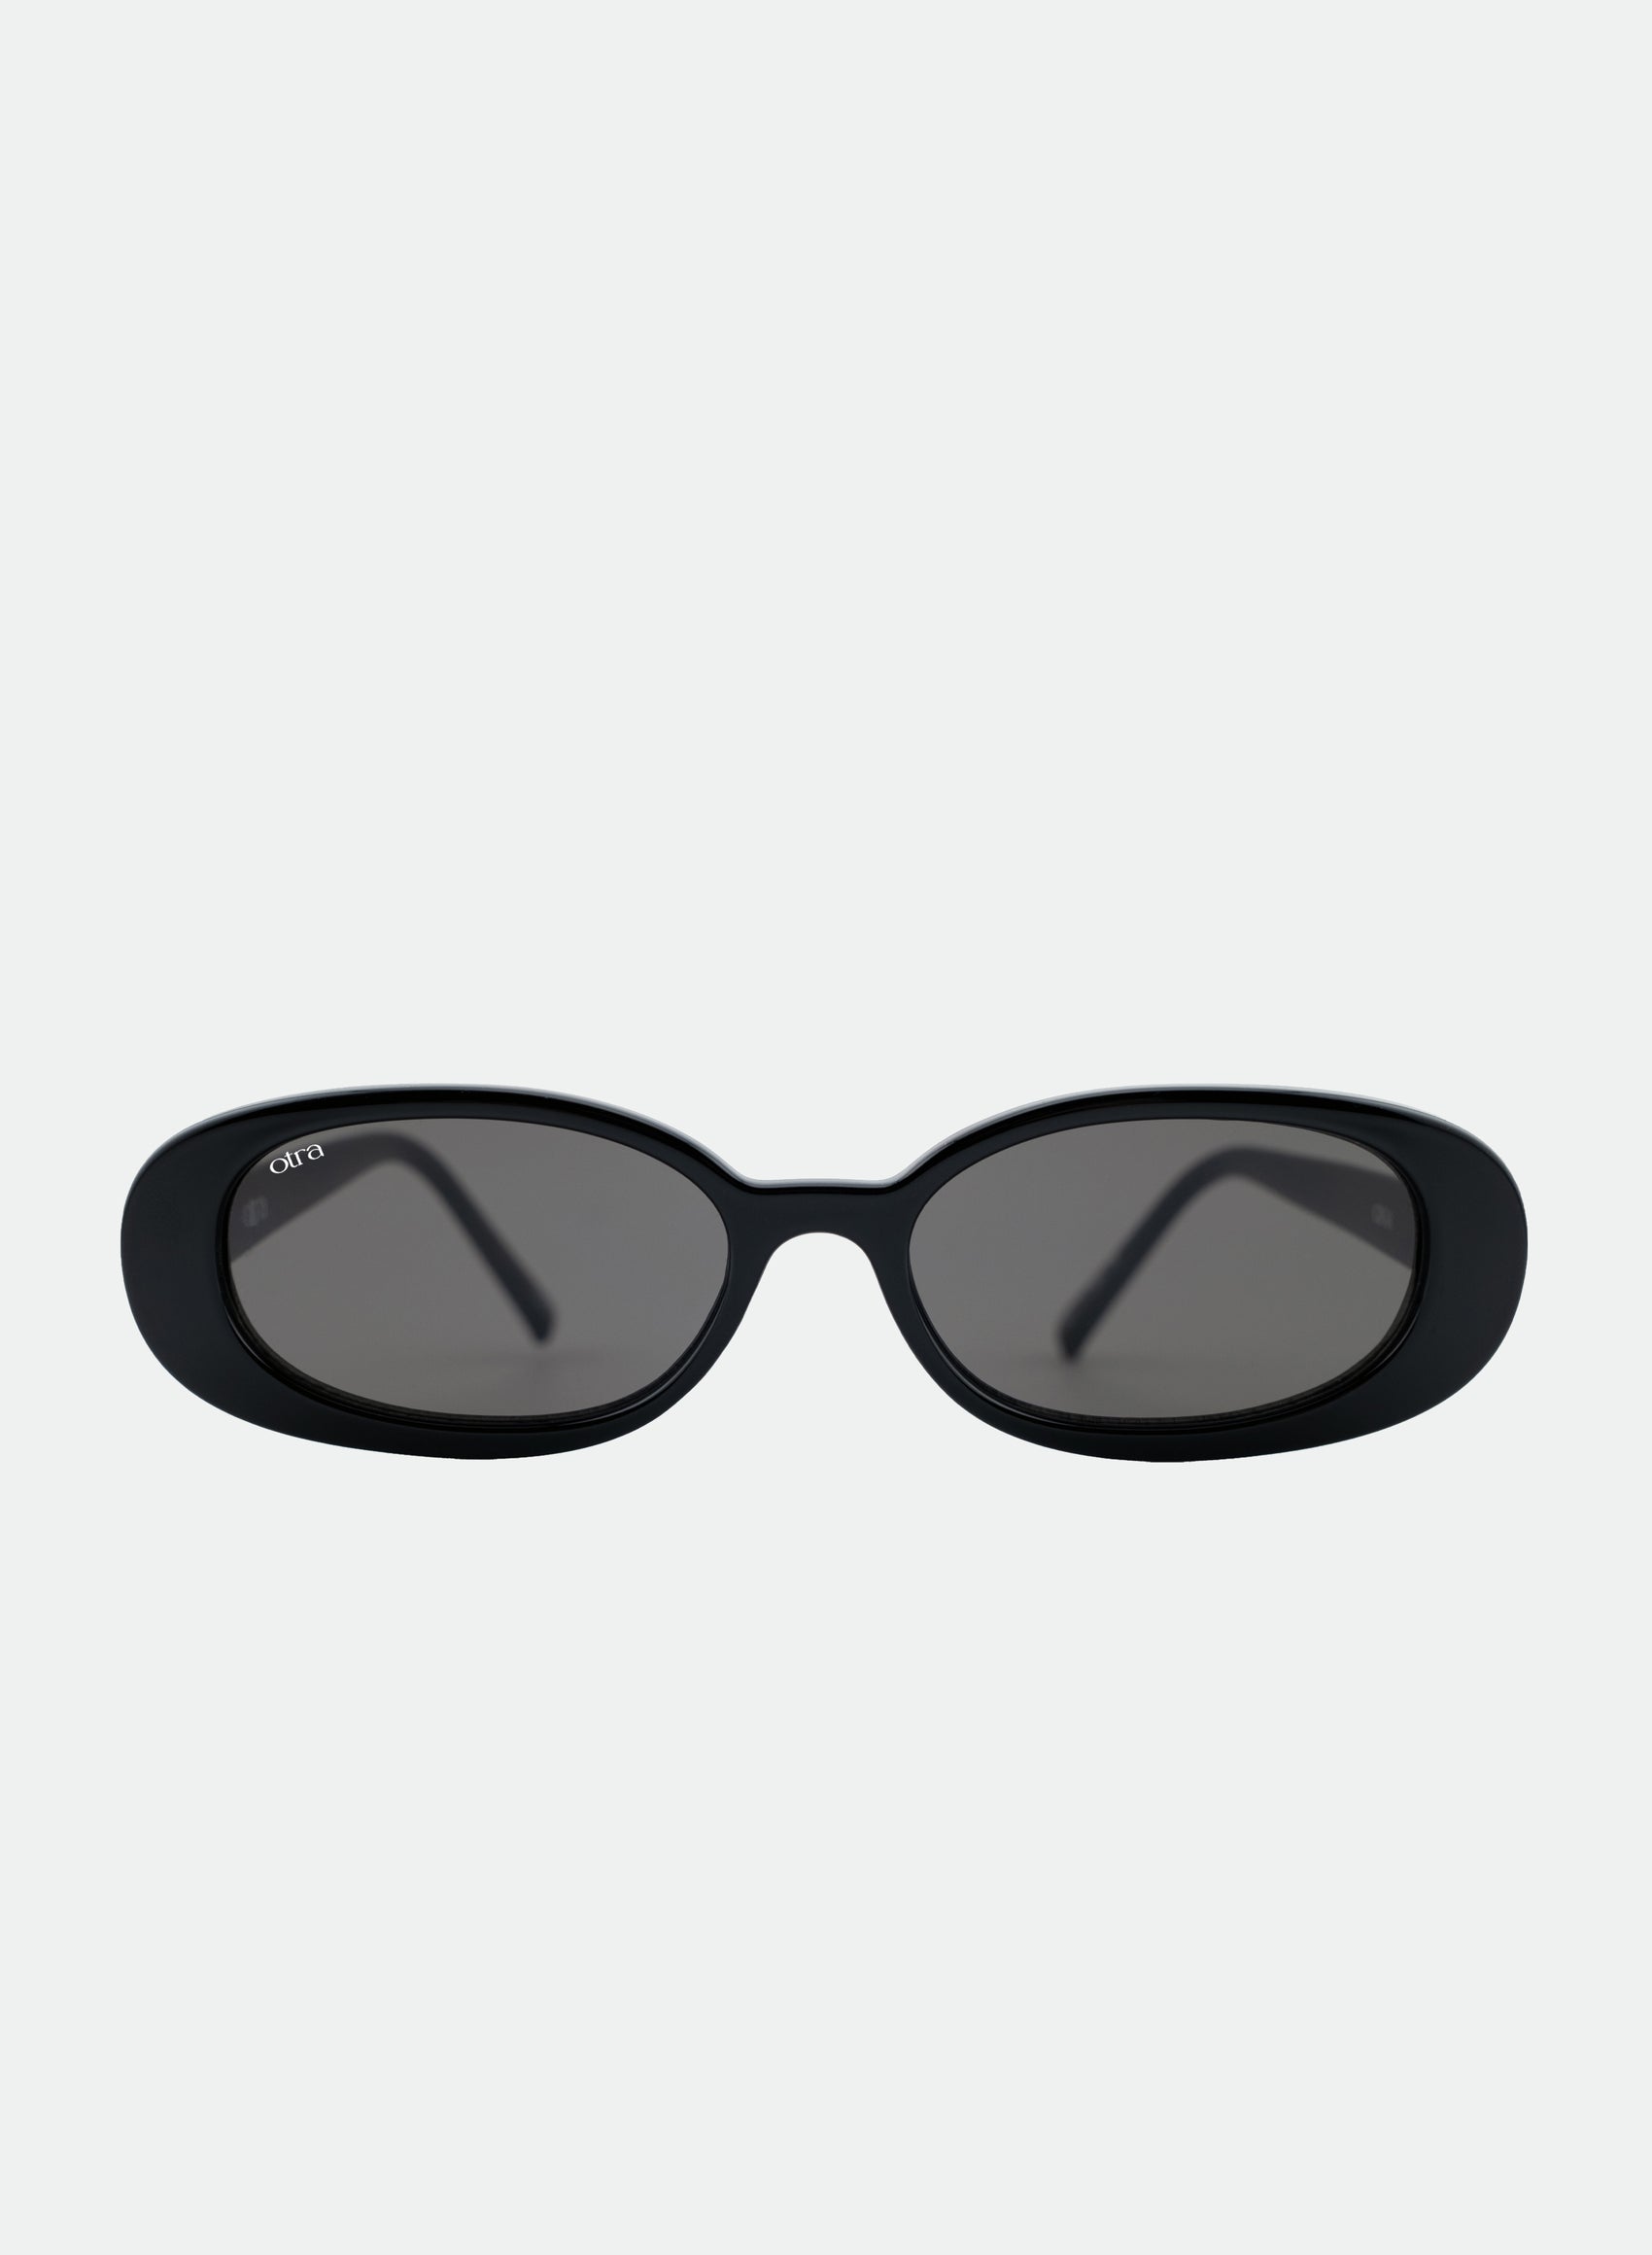 Gina sunglasses in black